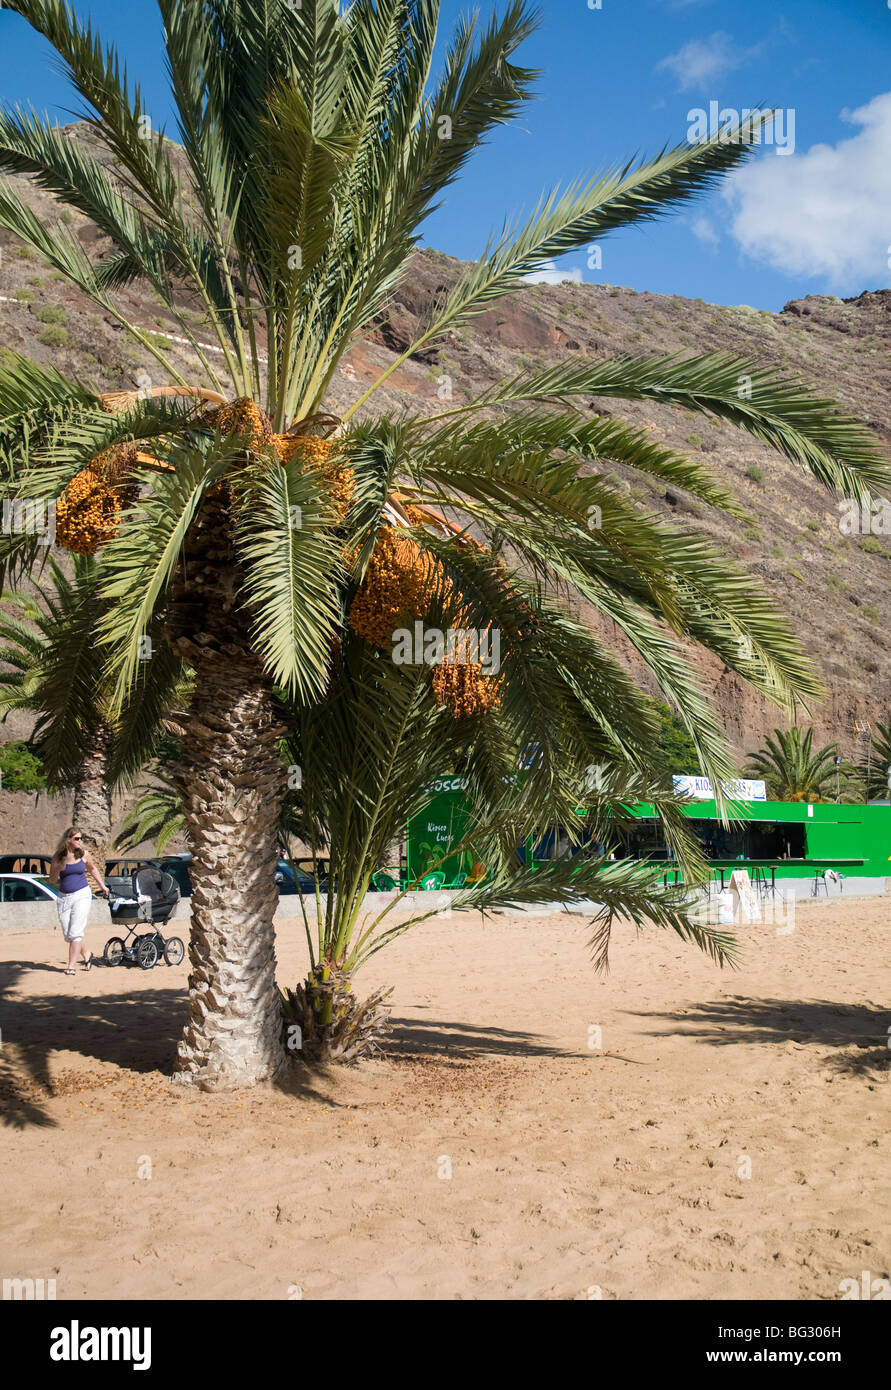 Playa de Las Teresitas, sulla spiaggia di Tenerife, Isole Canarie, Spagna Foto Stock